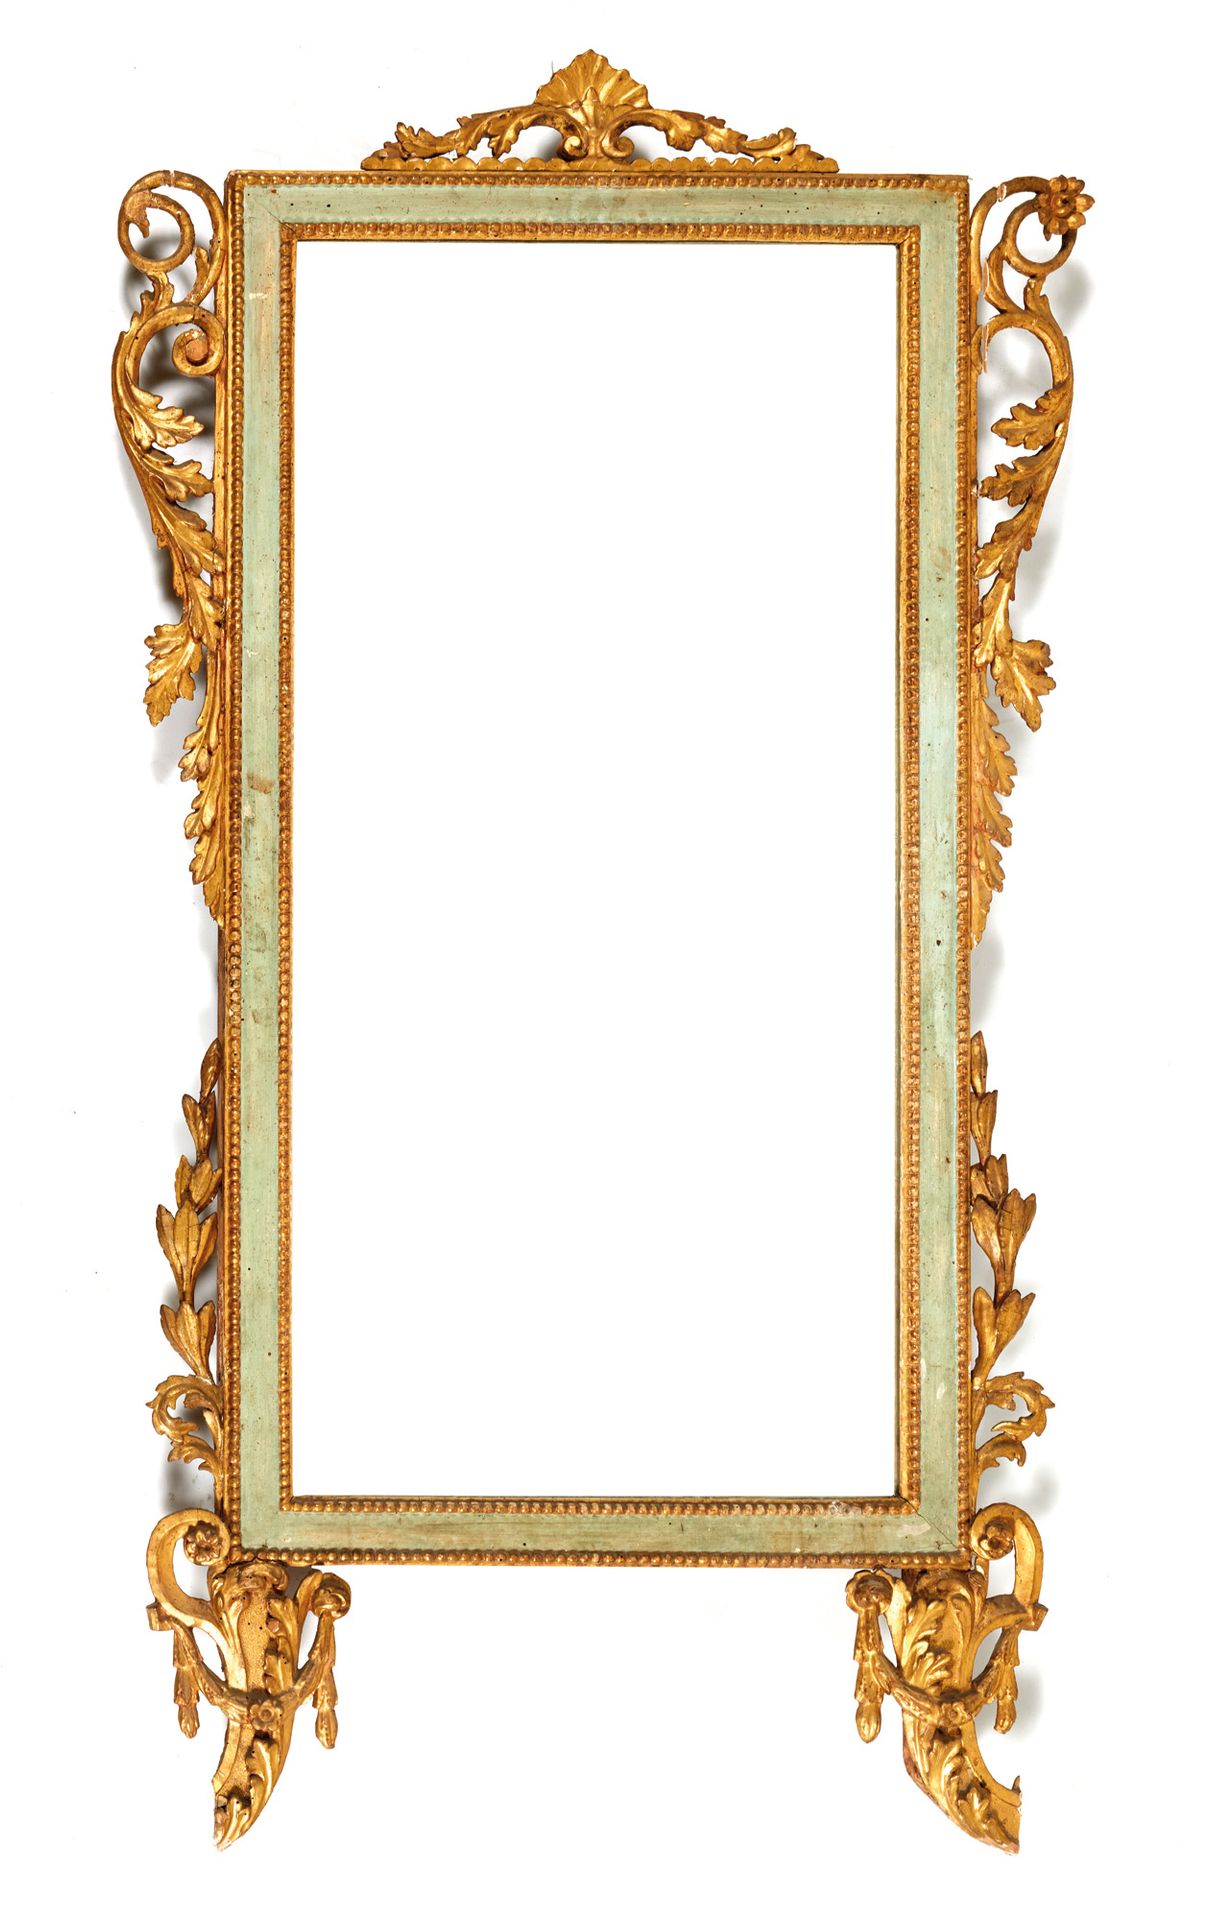 MIROIR 镜子

绿色和金色的漆木，装饰有叶子和珍珠楣。

18世纪下半叶

Fronton补充说

145 x 80 cm

(事故、破损和部件丢失)